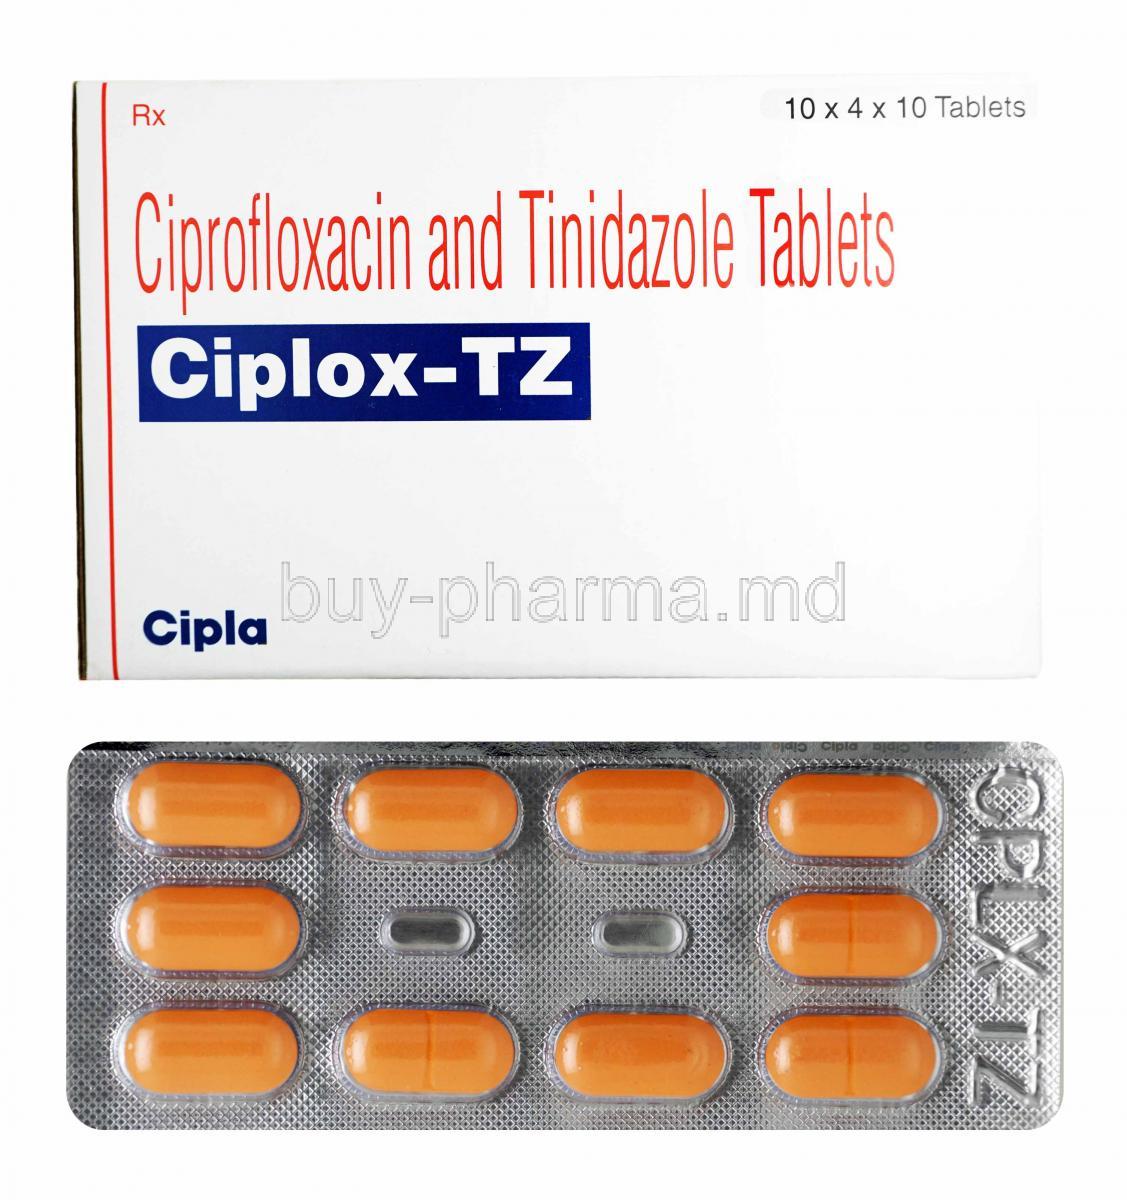 Ciplox-TZ, Ciprofloxacin and Tinidazole box and tablets